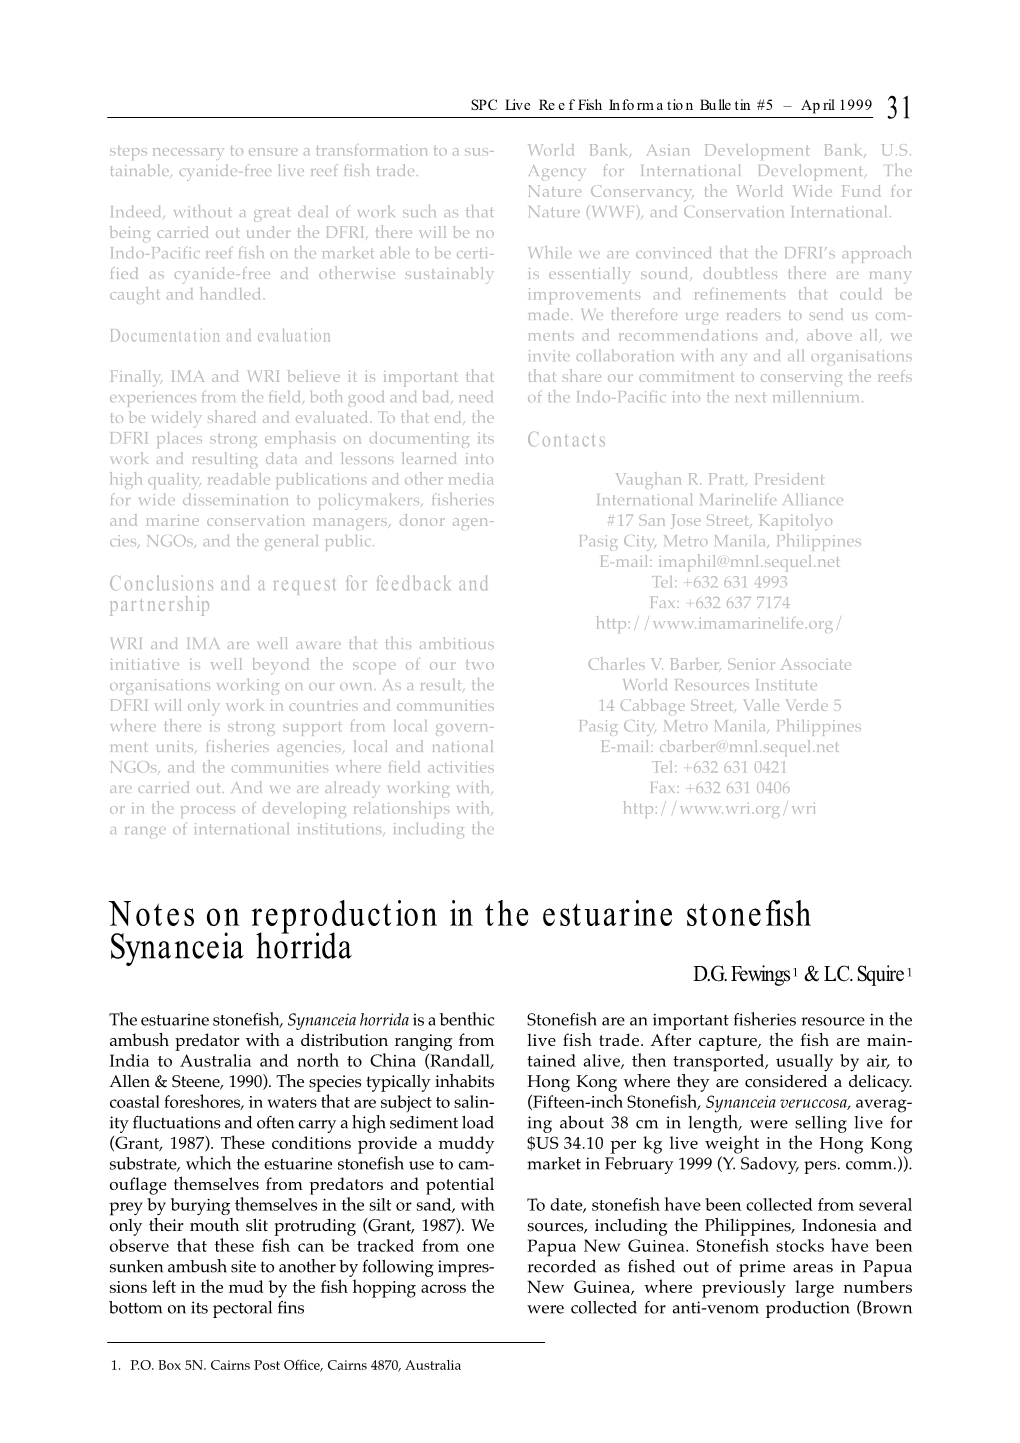 Notes on Reproduction in the Estuarine Stonefish &lt;I&gt;Synanceia Horrida&lt;/I&gt;